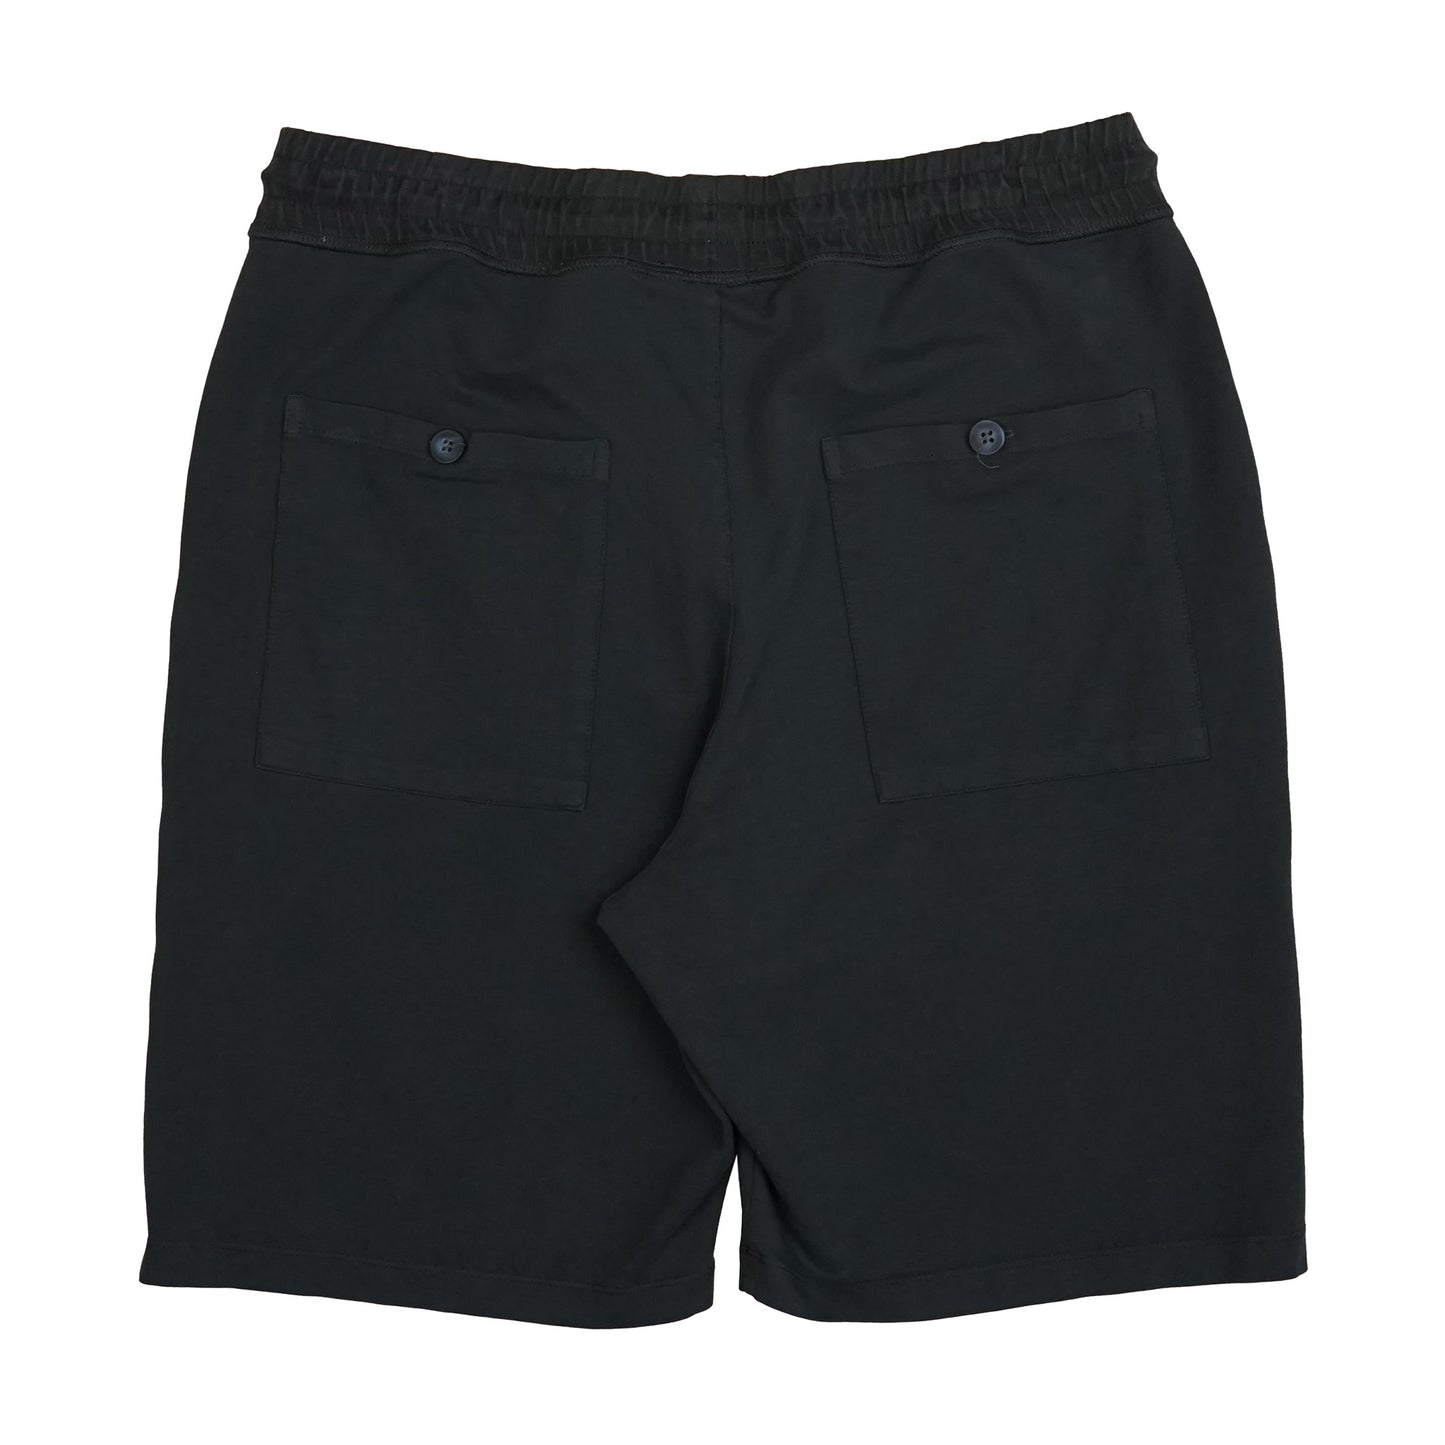 Delray Charcoal Shorts